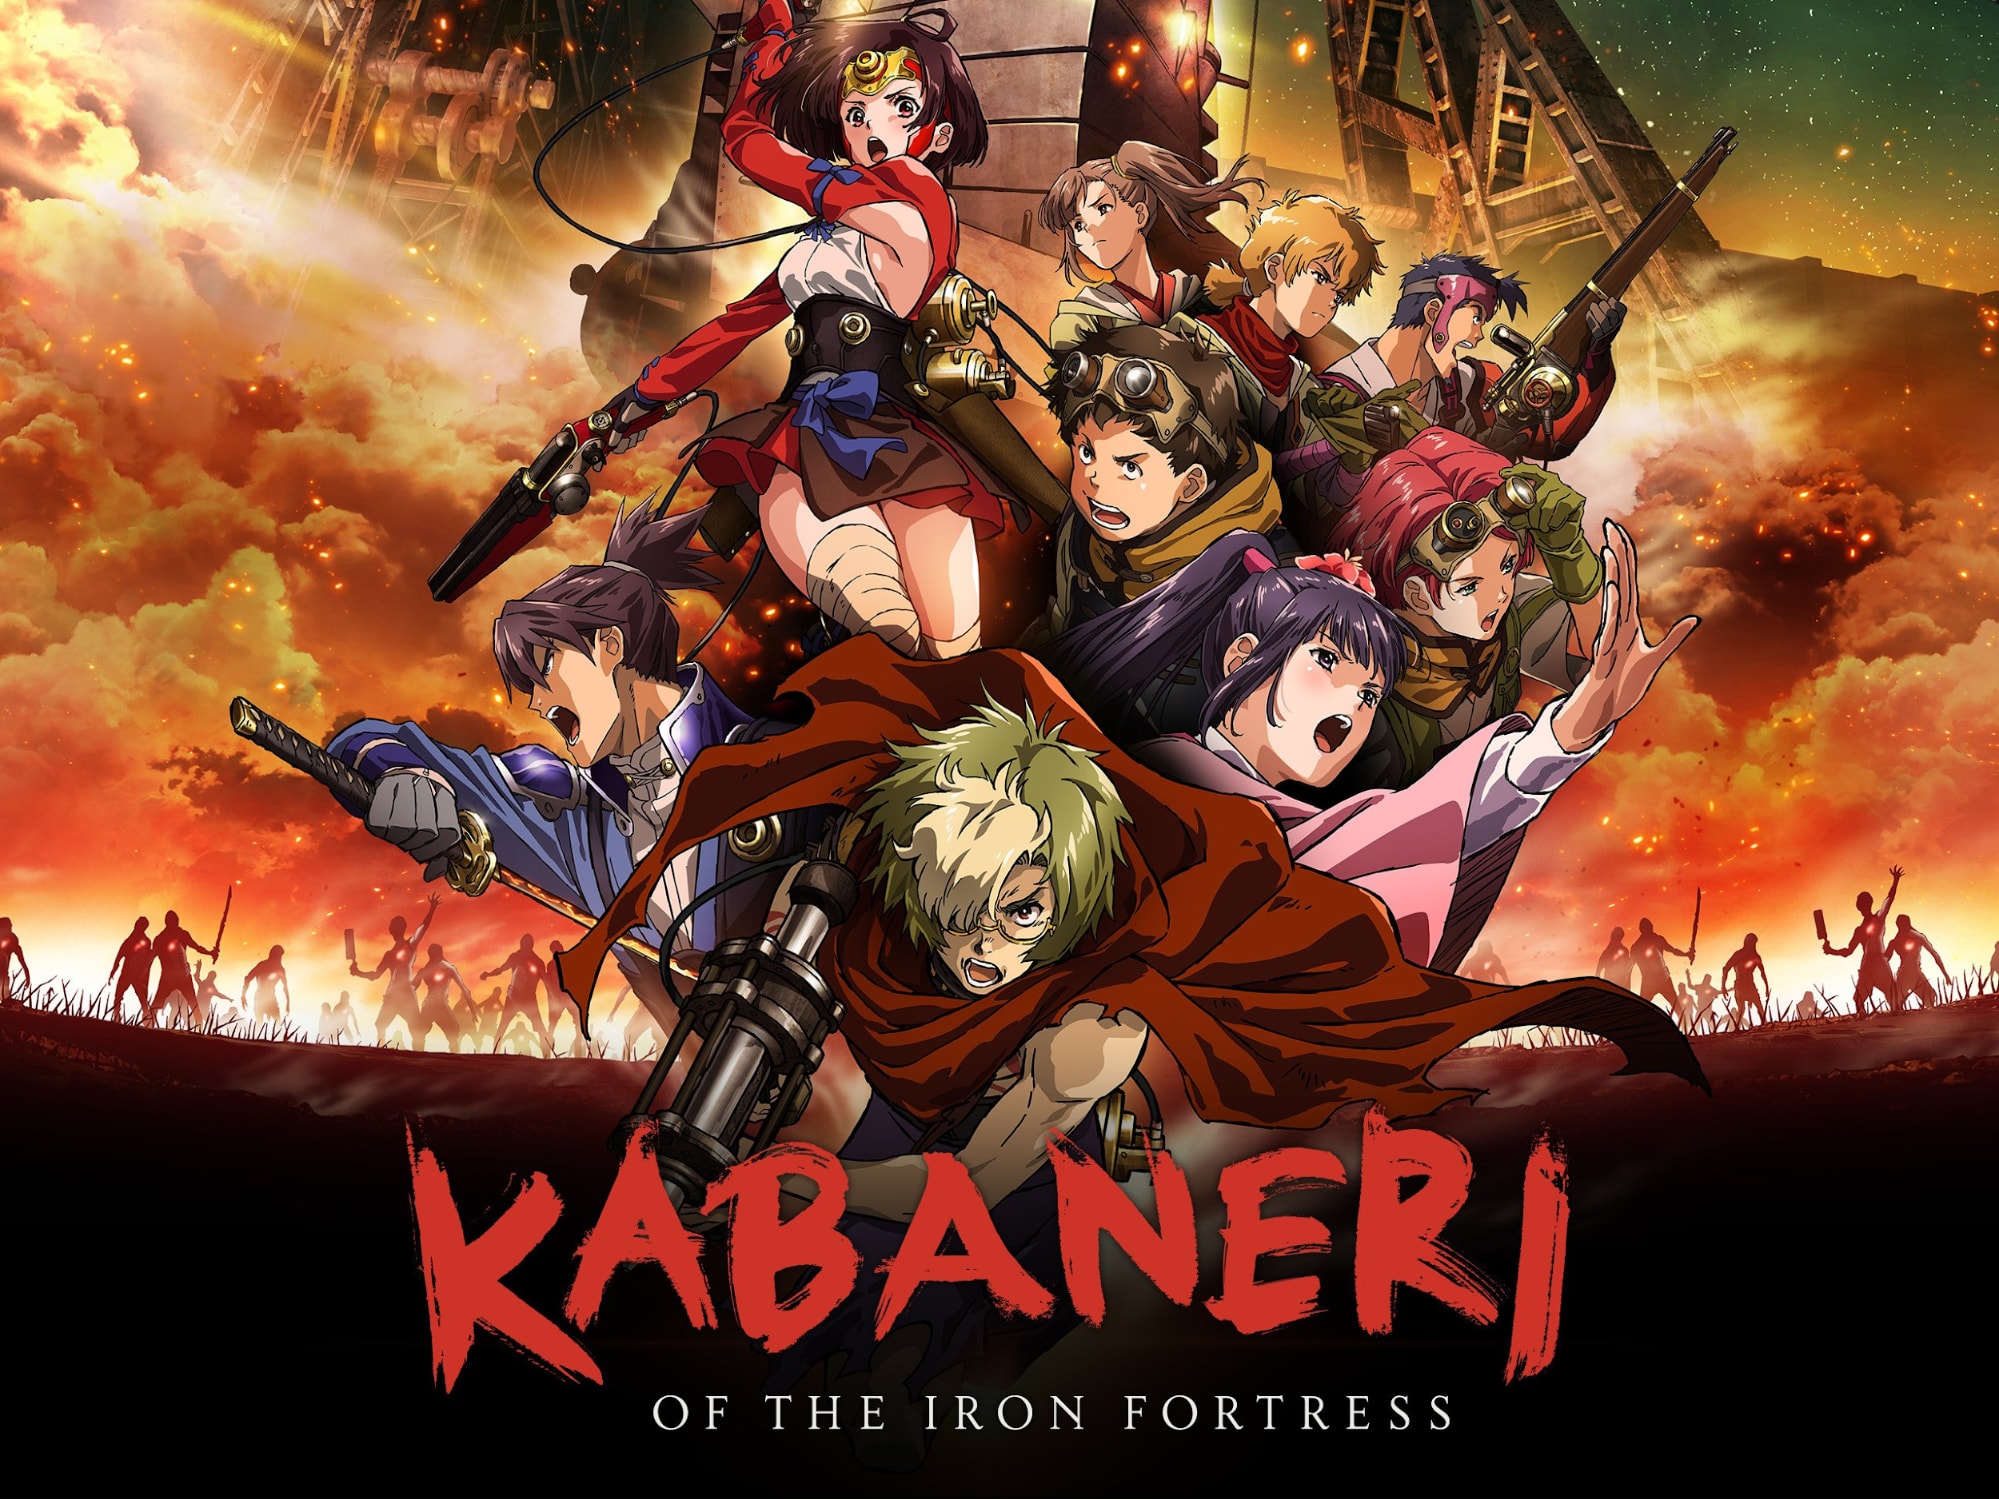 post-apocalyptic anime - Kabaneri of the Iron Fortress